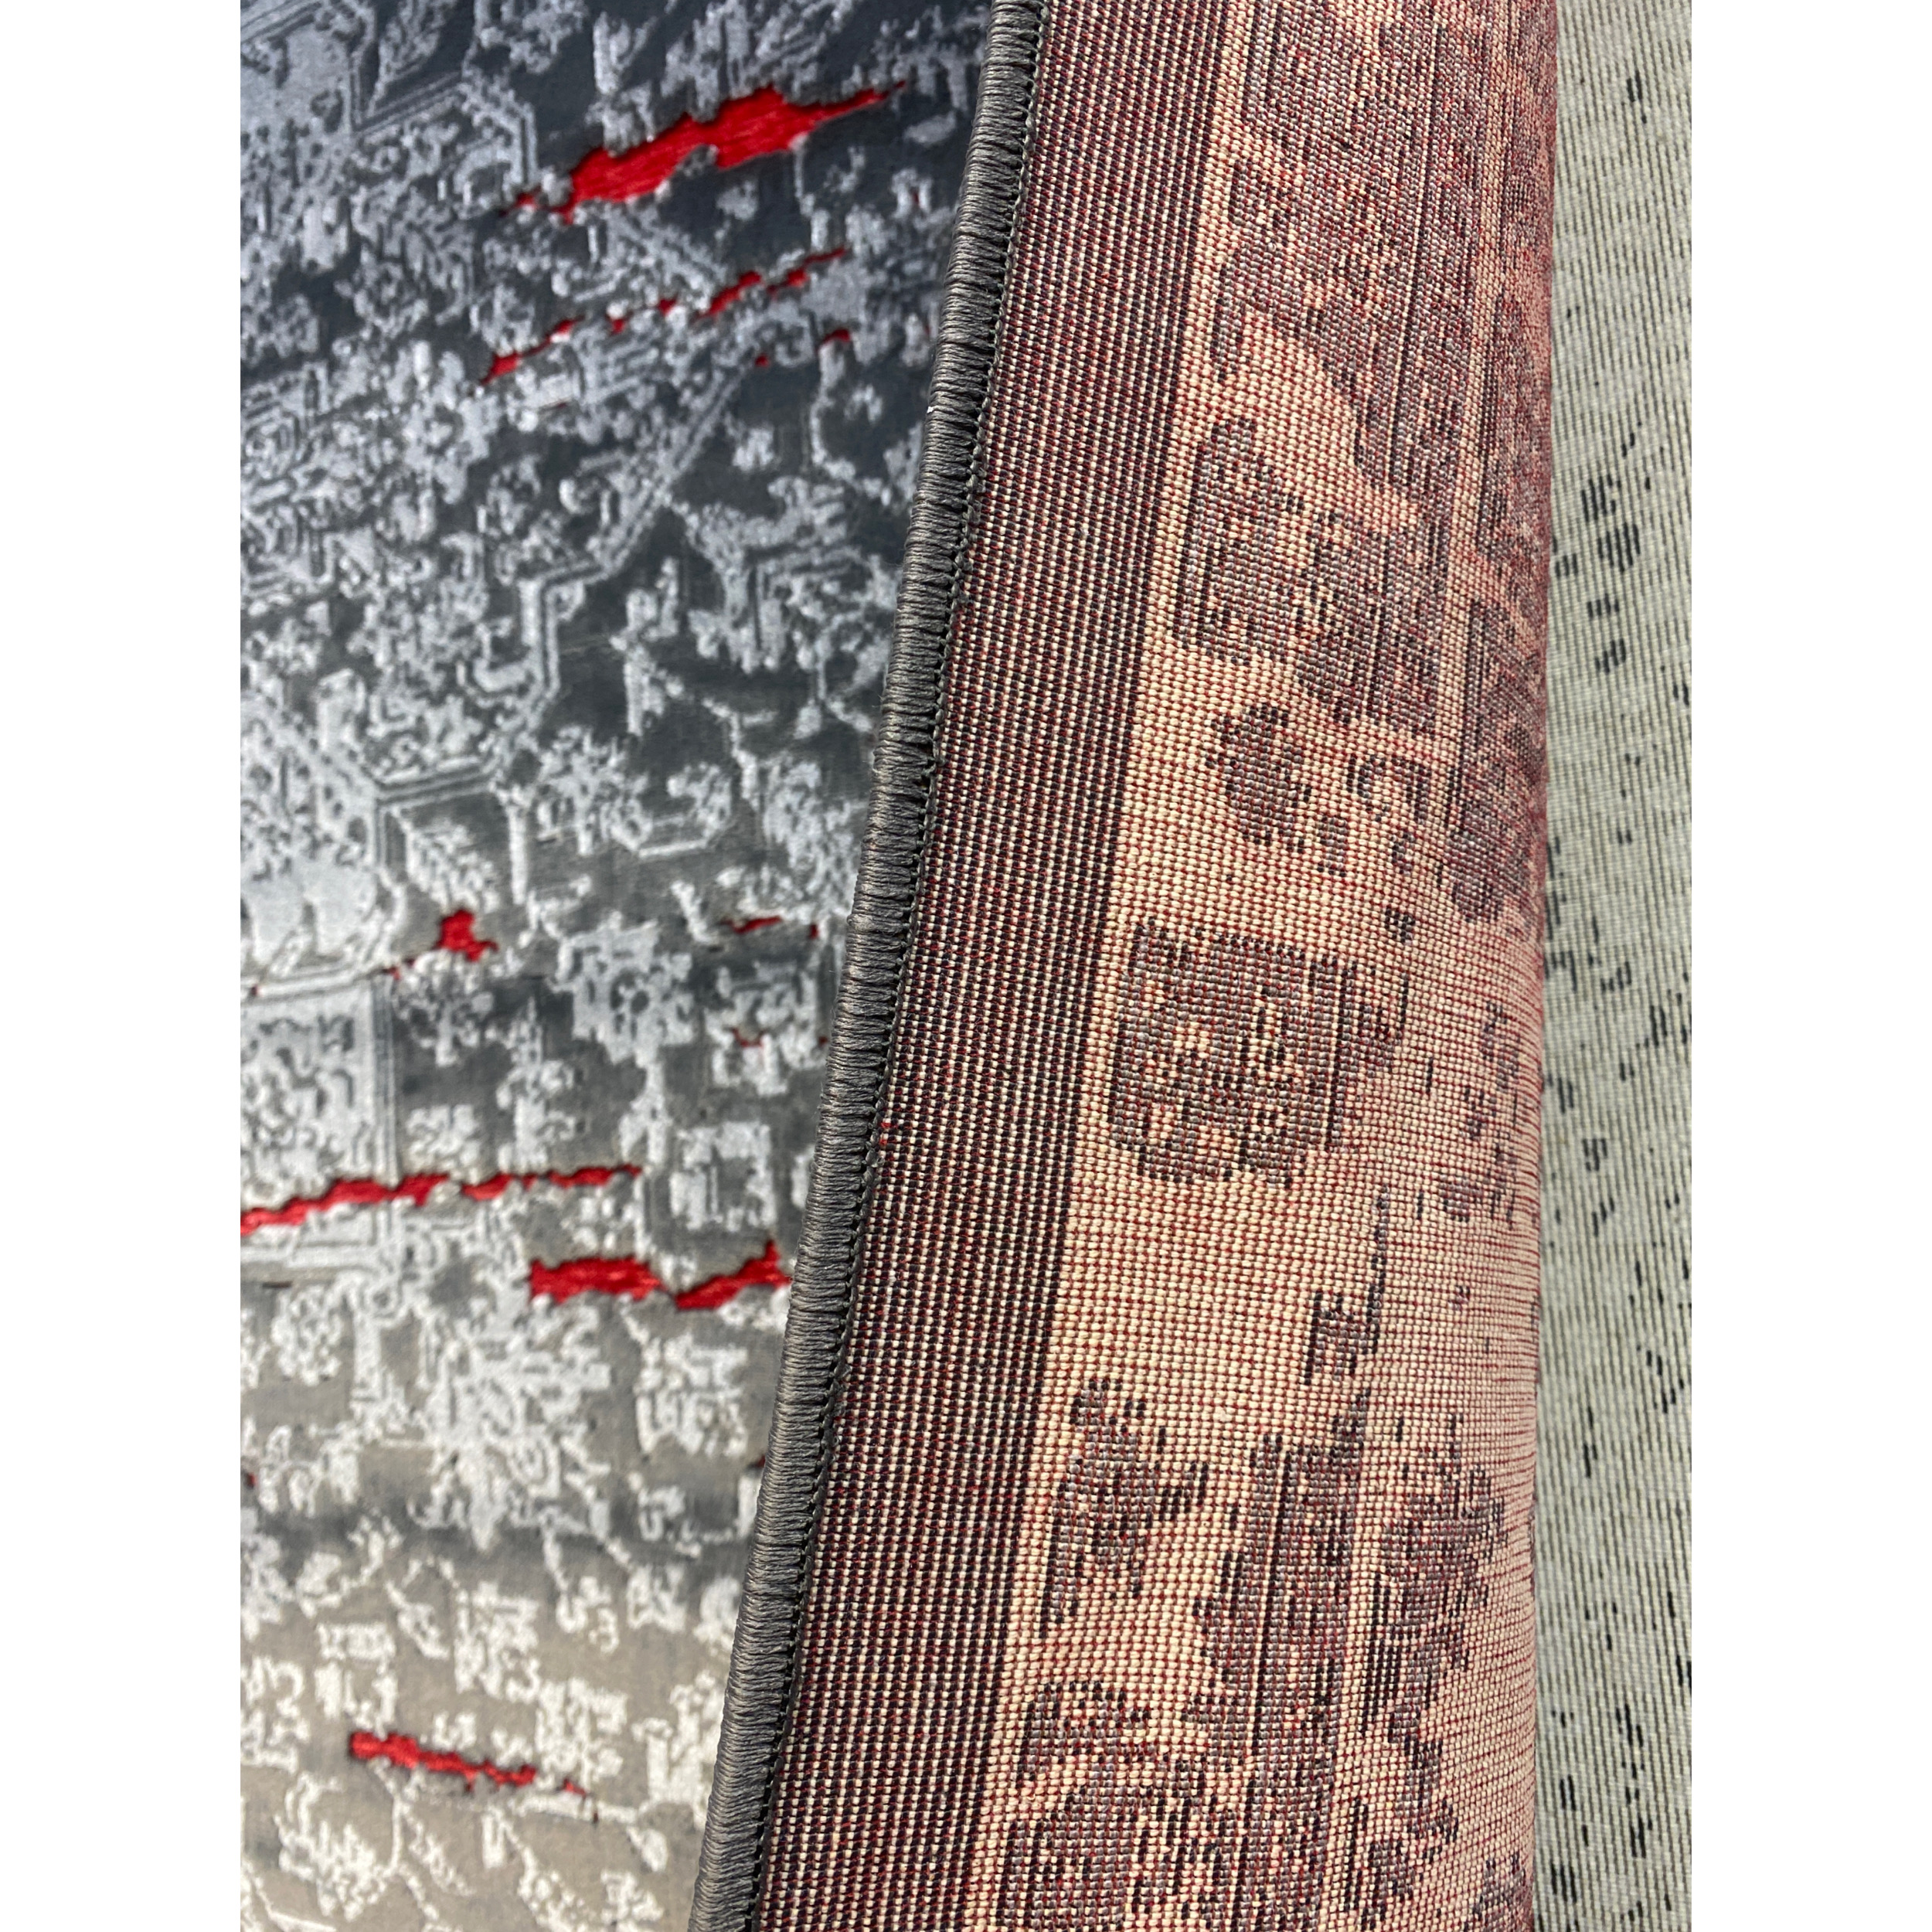 فرش ماشینی مدل مدرن طرح پتینه وینتیج 2013 زمینه قرمز